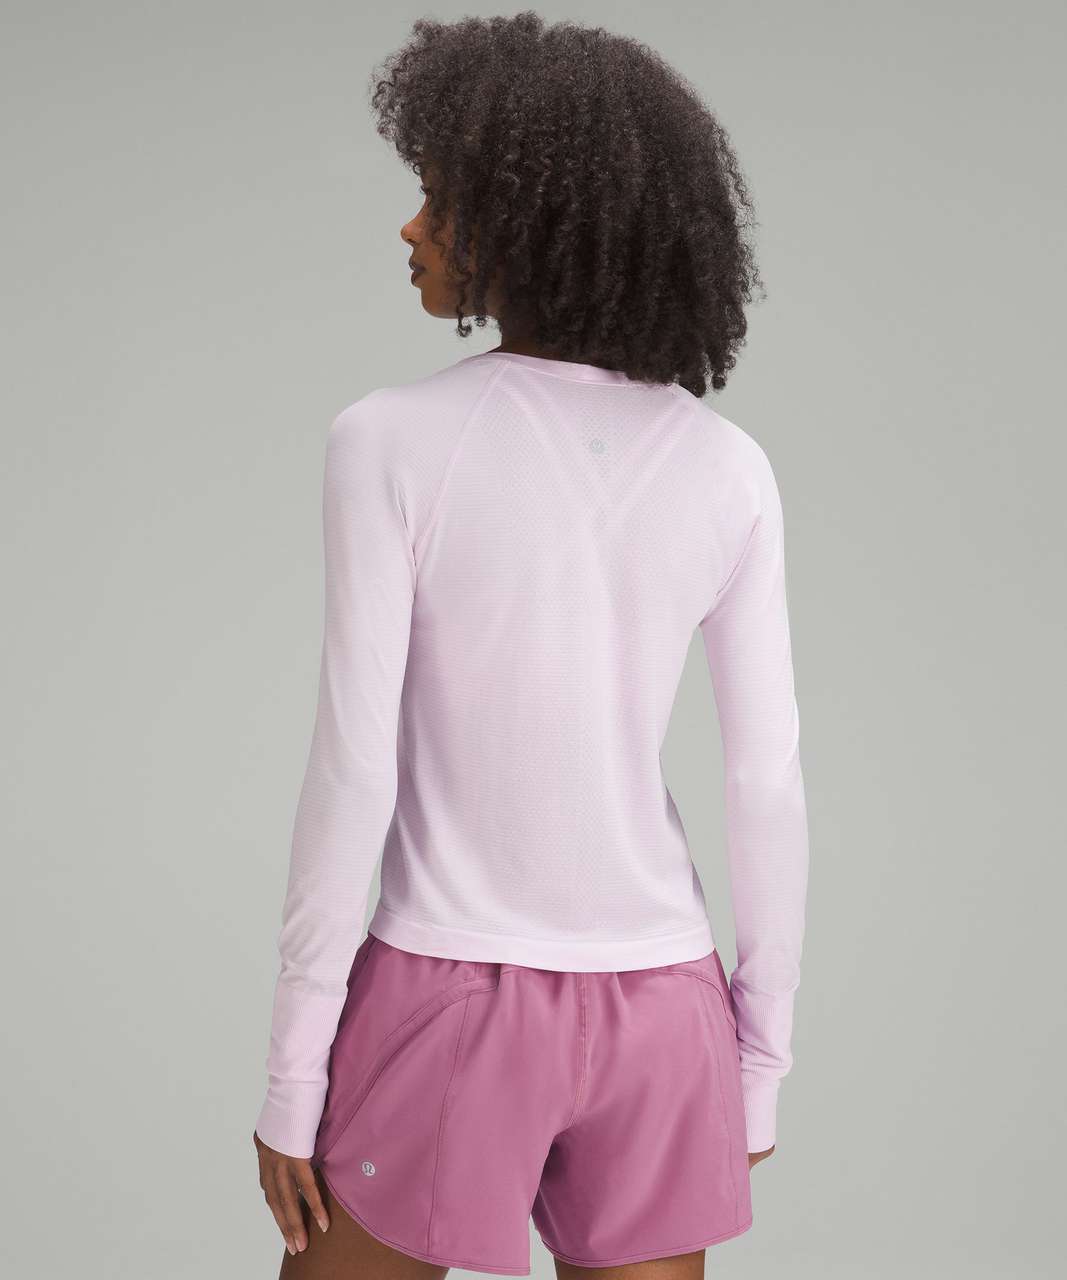 Lululemon Swiftly Tech Long-Sleeve Shirt 2.0 *Race Length - Meadowsweet Pink / Meadowsweet Pink